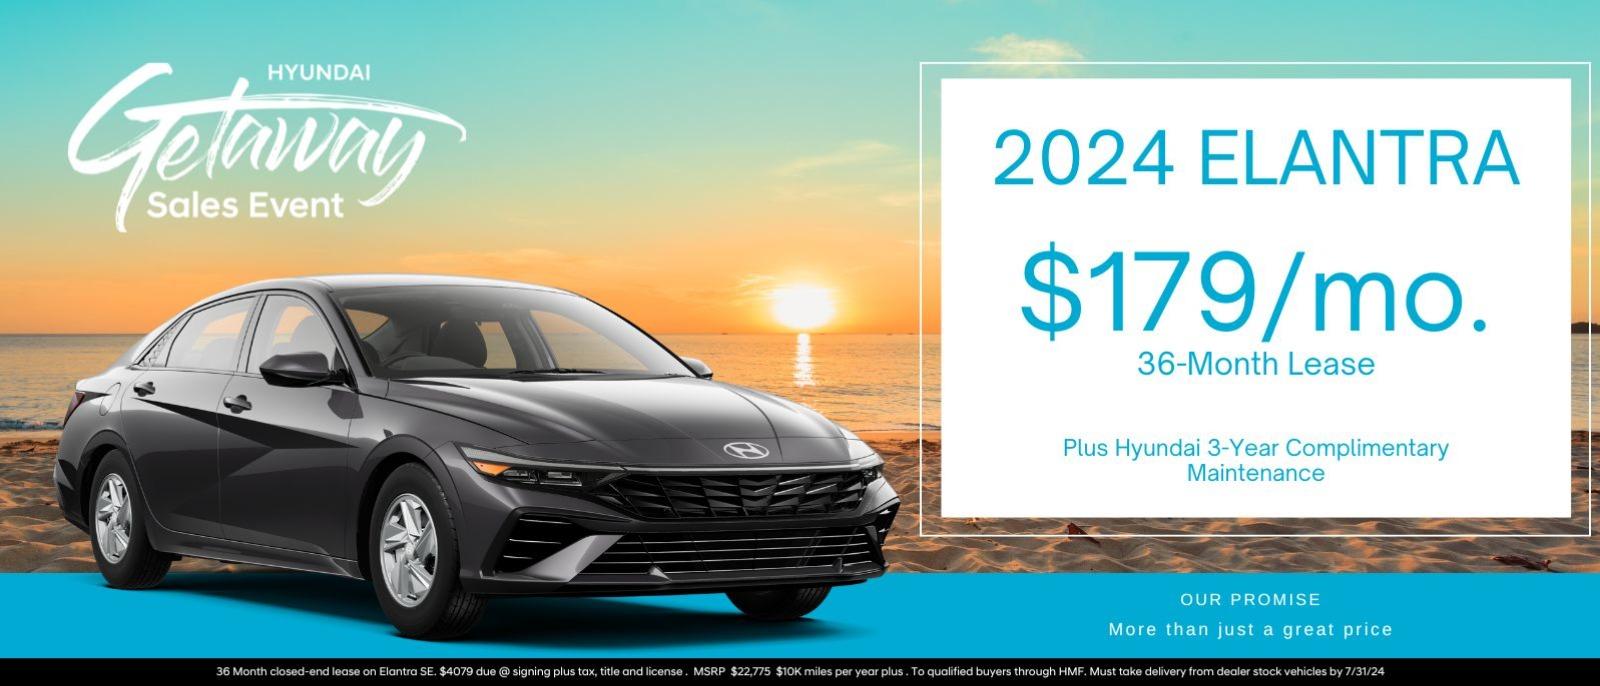 2024 Elantra
$179/mo. 36-month Lease
Plus Hyundai 3--Year Complimentary Maintenance